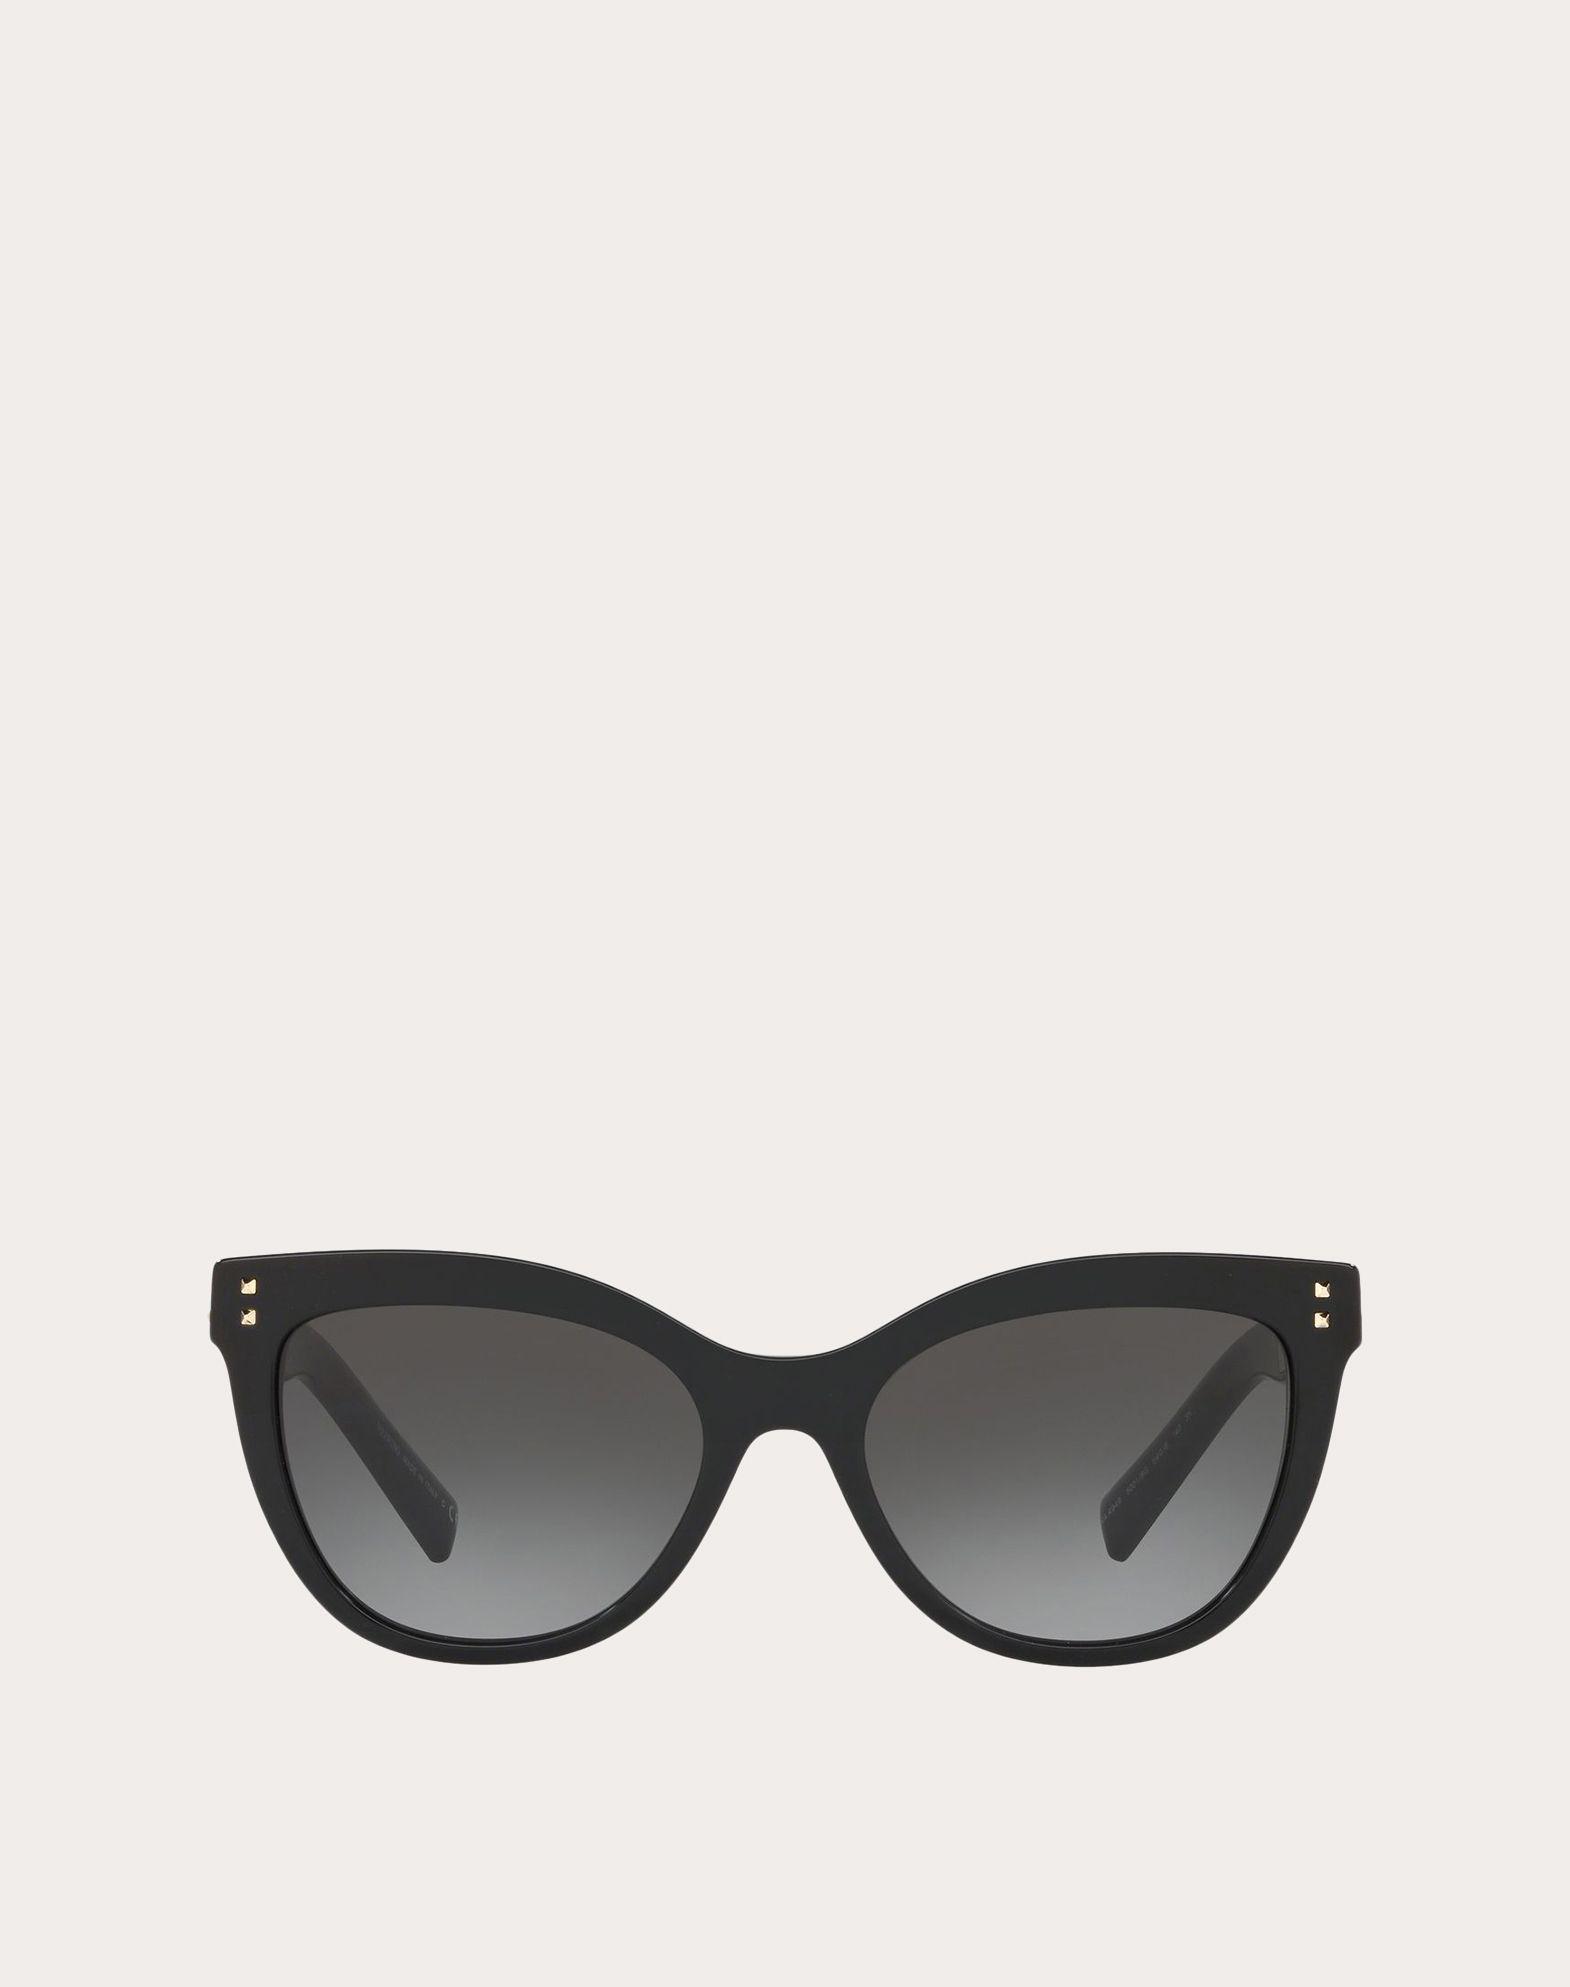 Valentino Occhiali Cat-eye Acetate Sunglasses With Studs in Black - Lyst